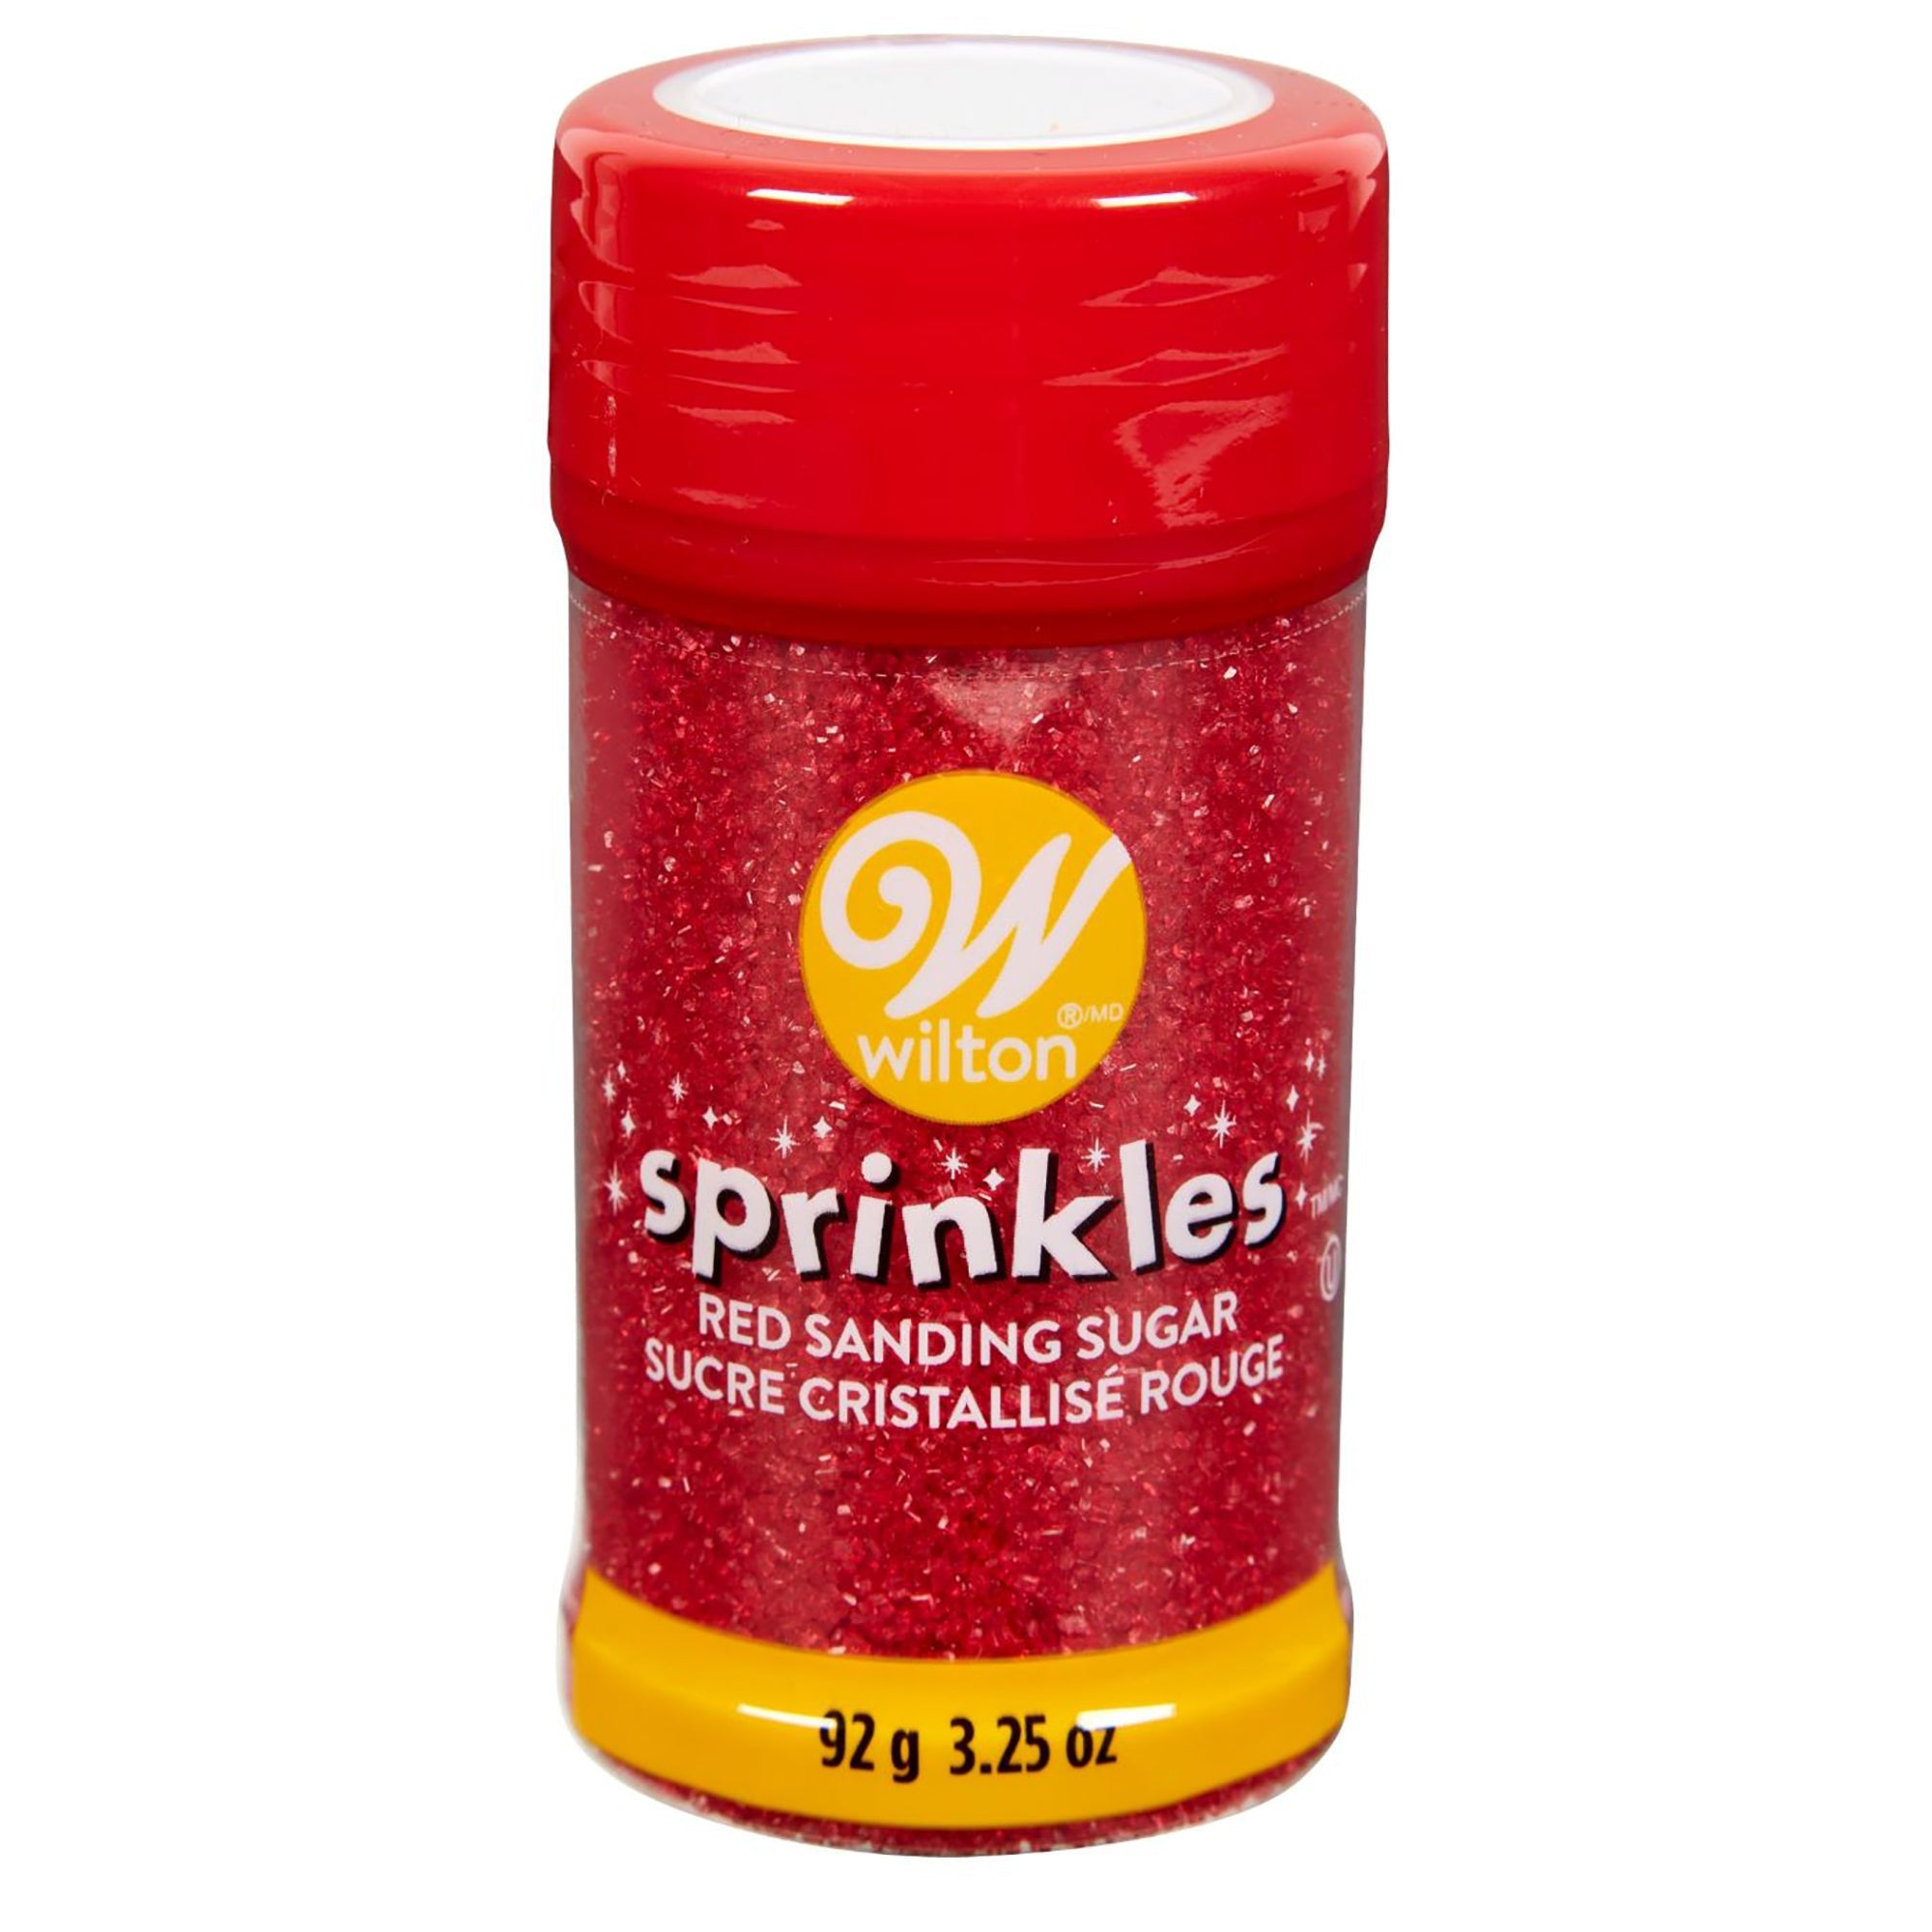 Wilton Sprinkles Red Sanding Sugar 3.25oz (92g)